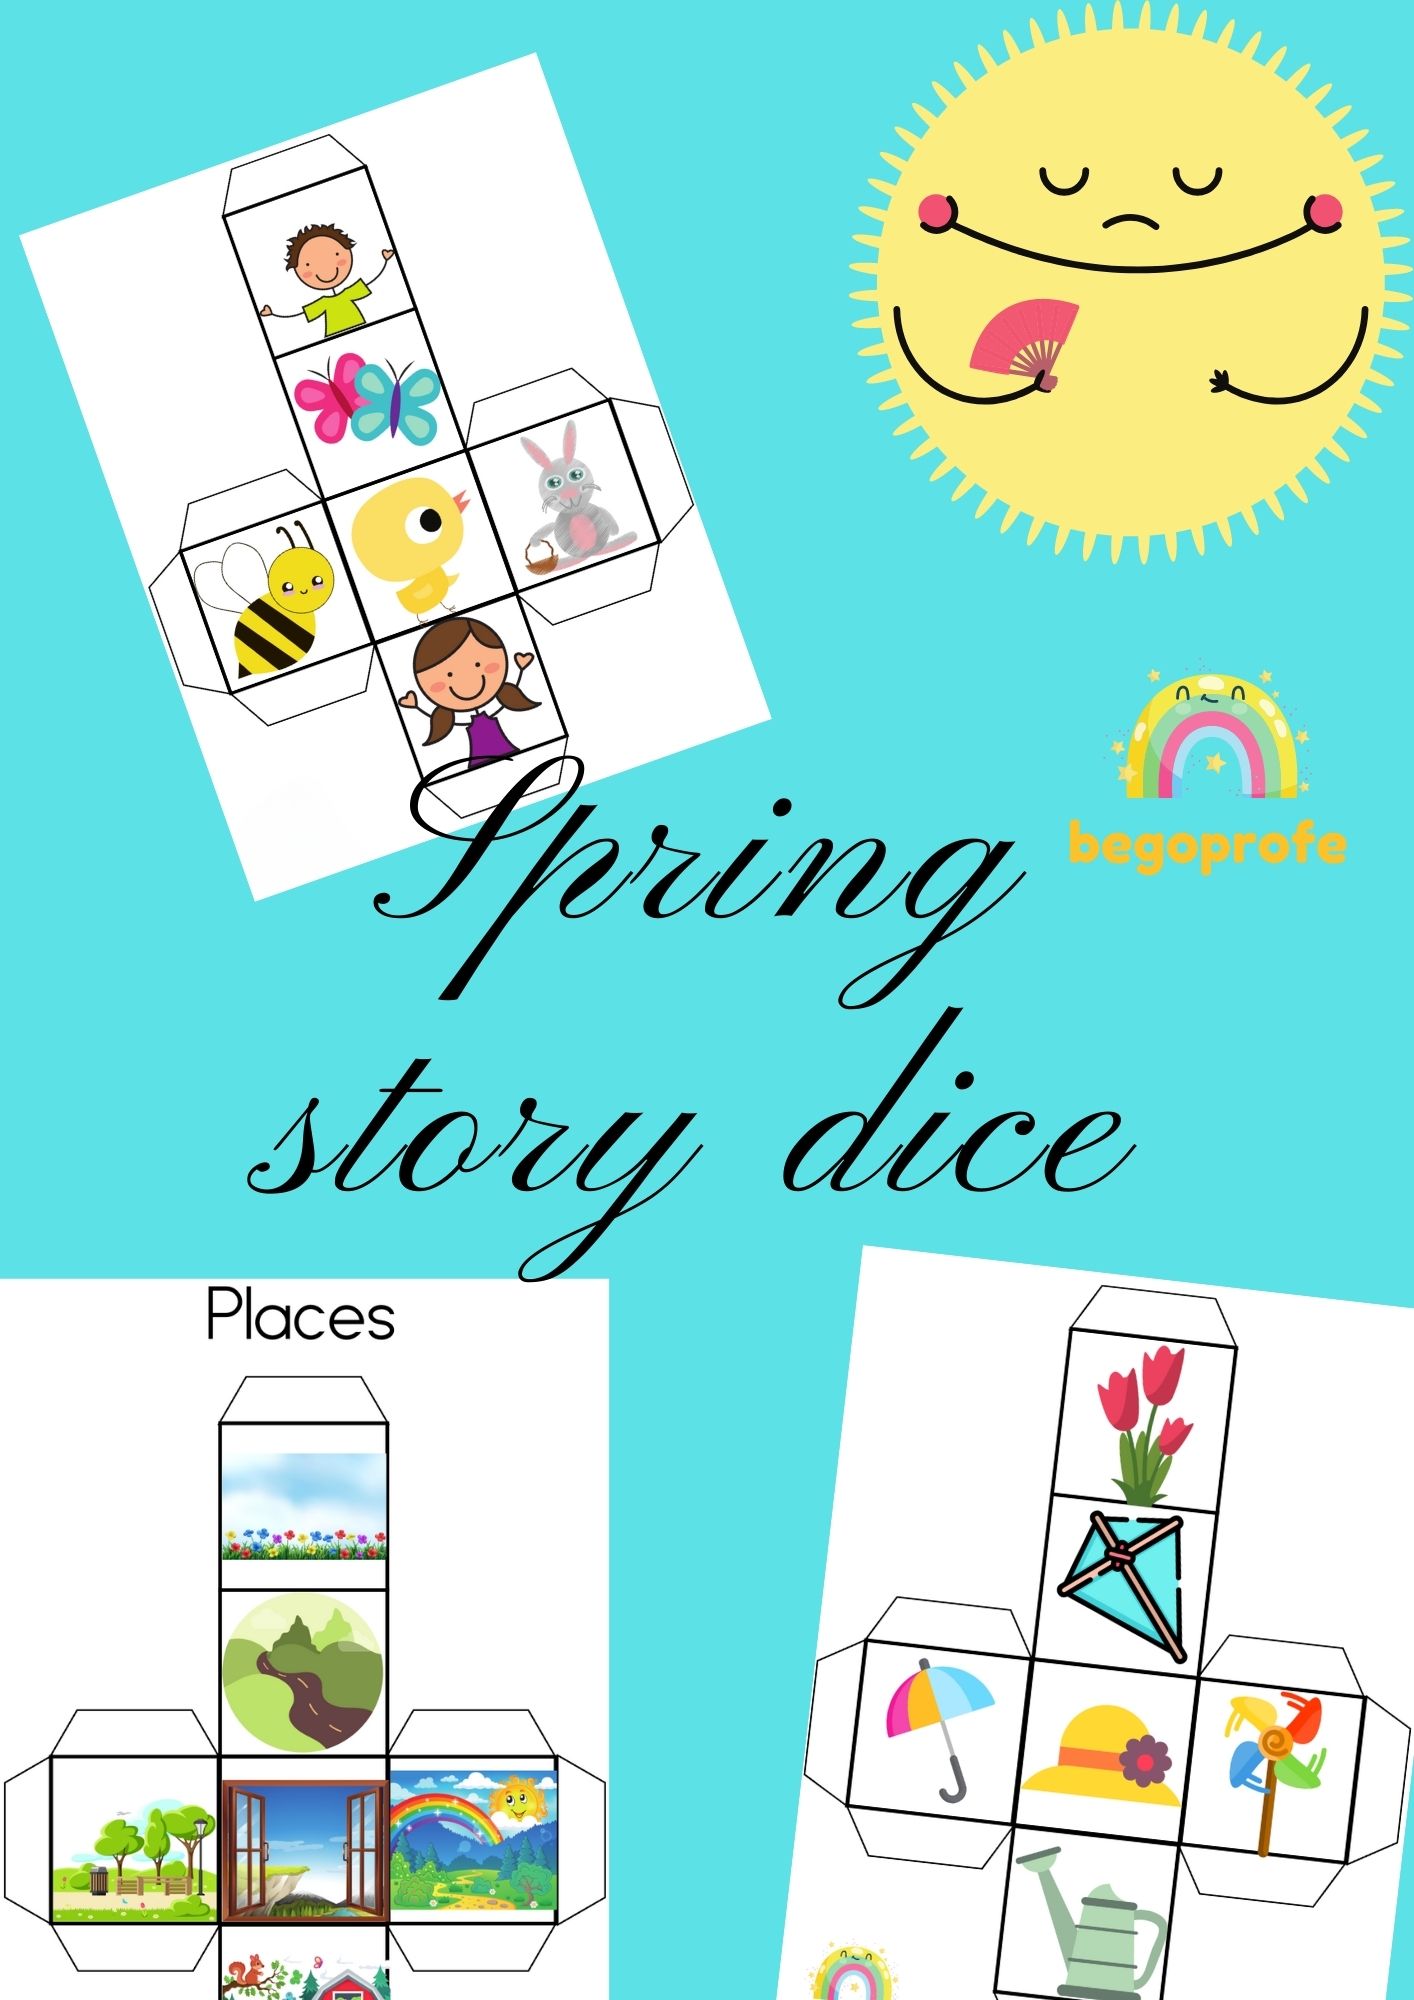 Spring story dice